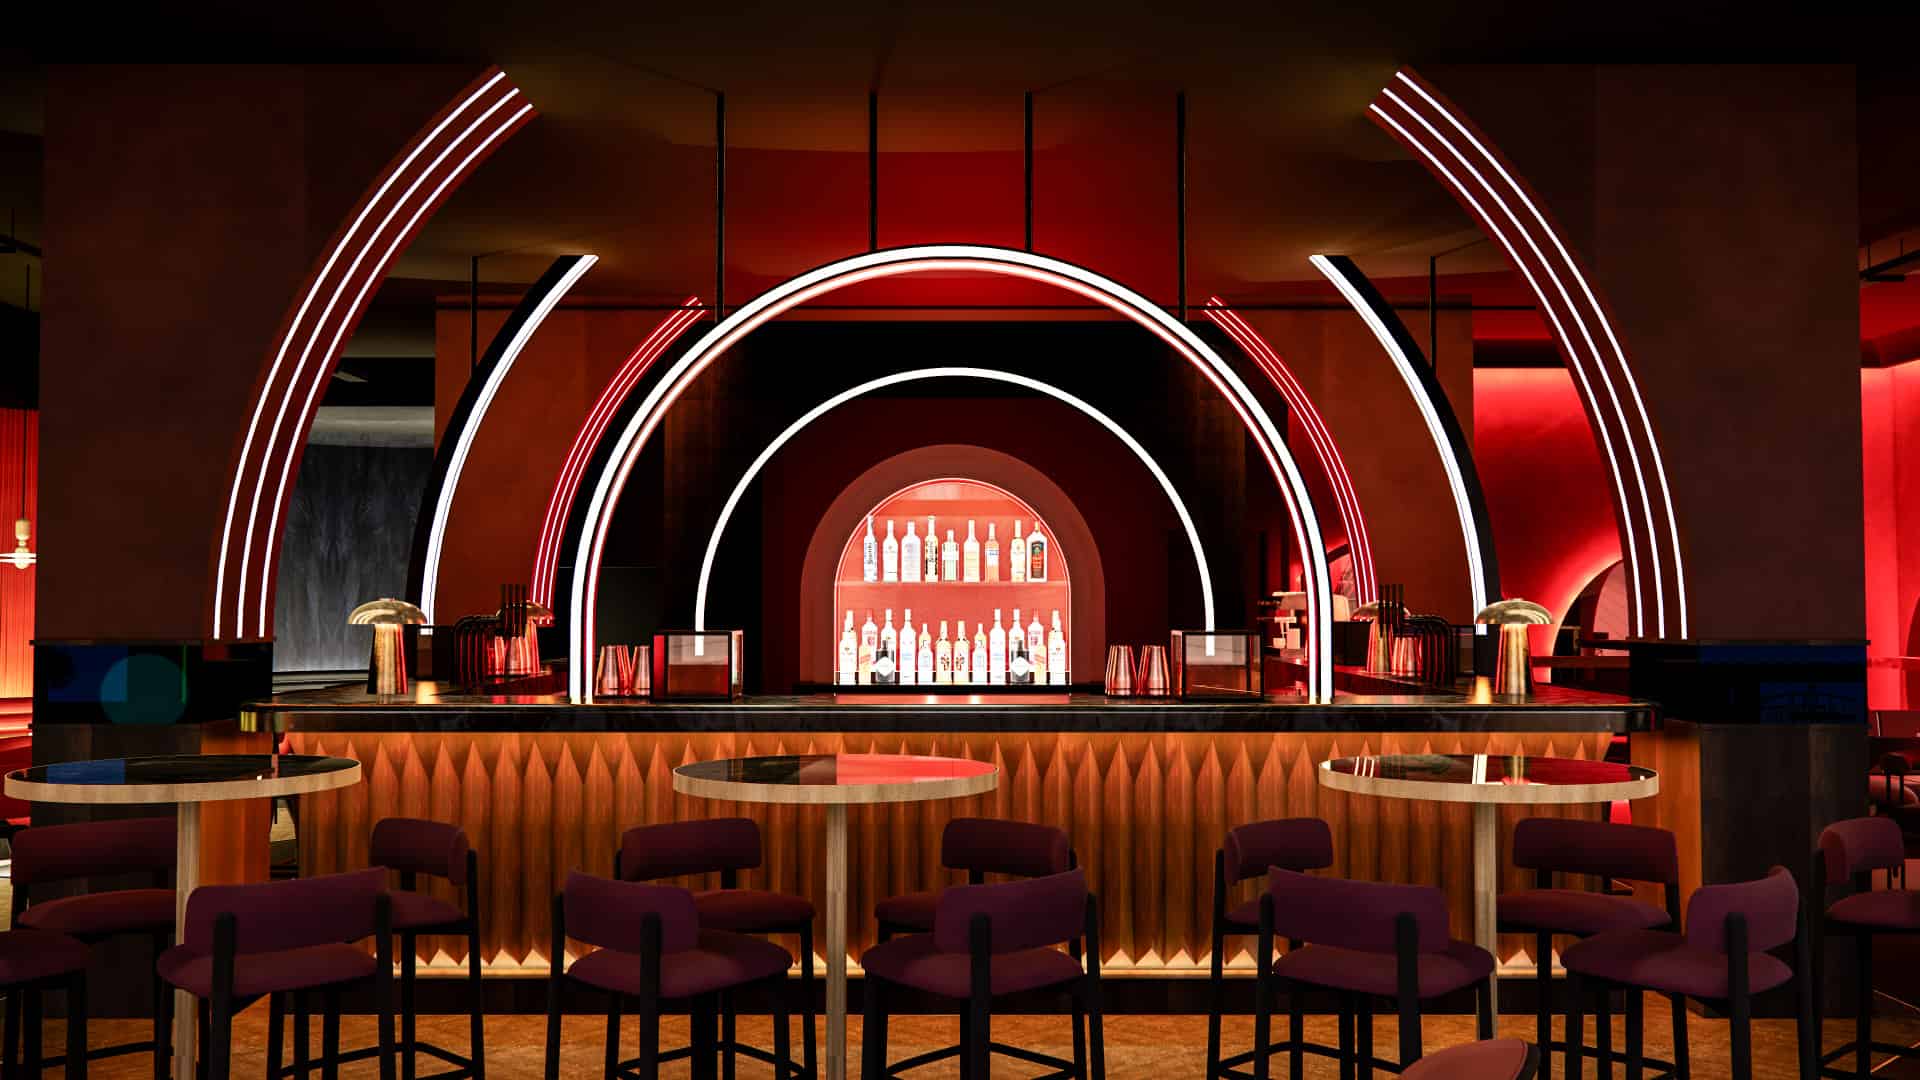 DesignLSM’s concept for The Alchemist's new London Victoria bar